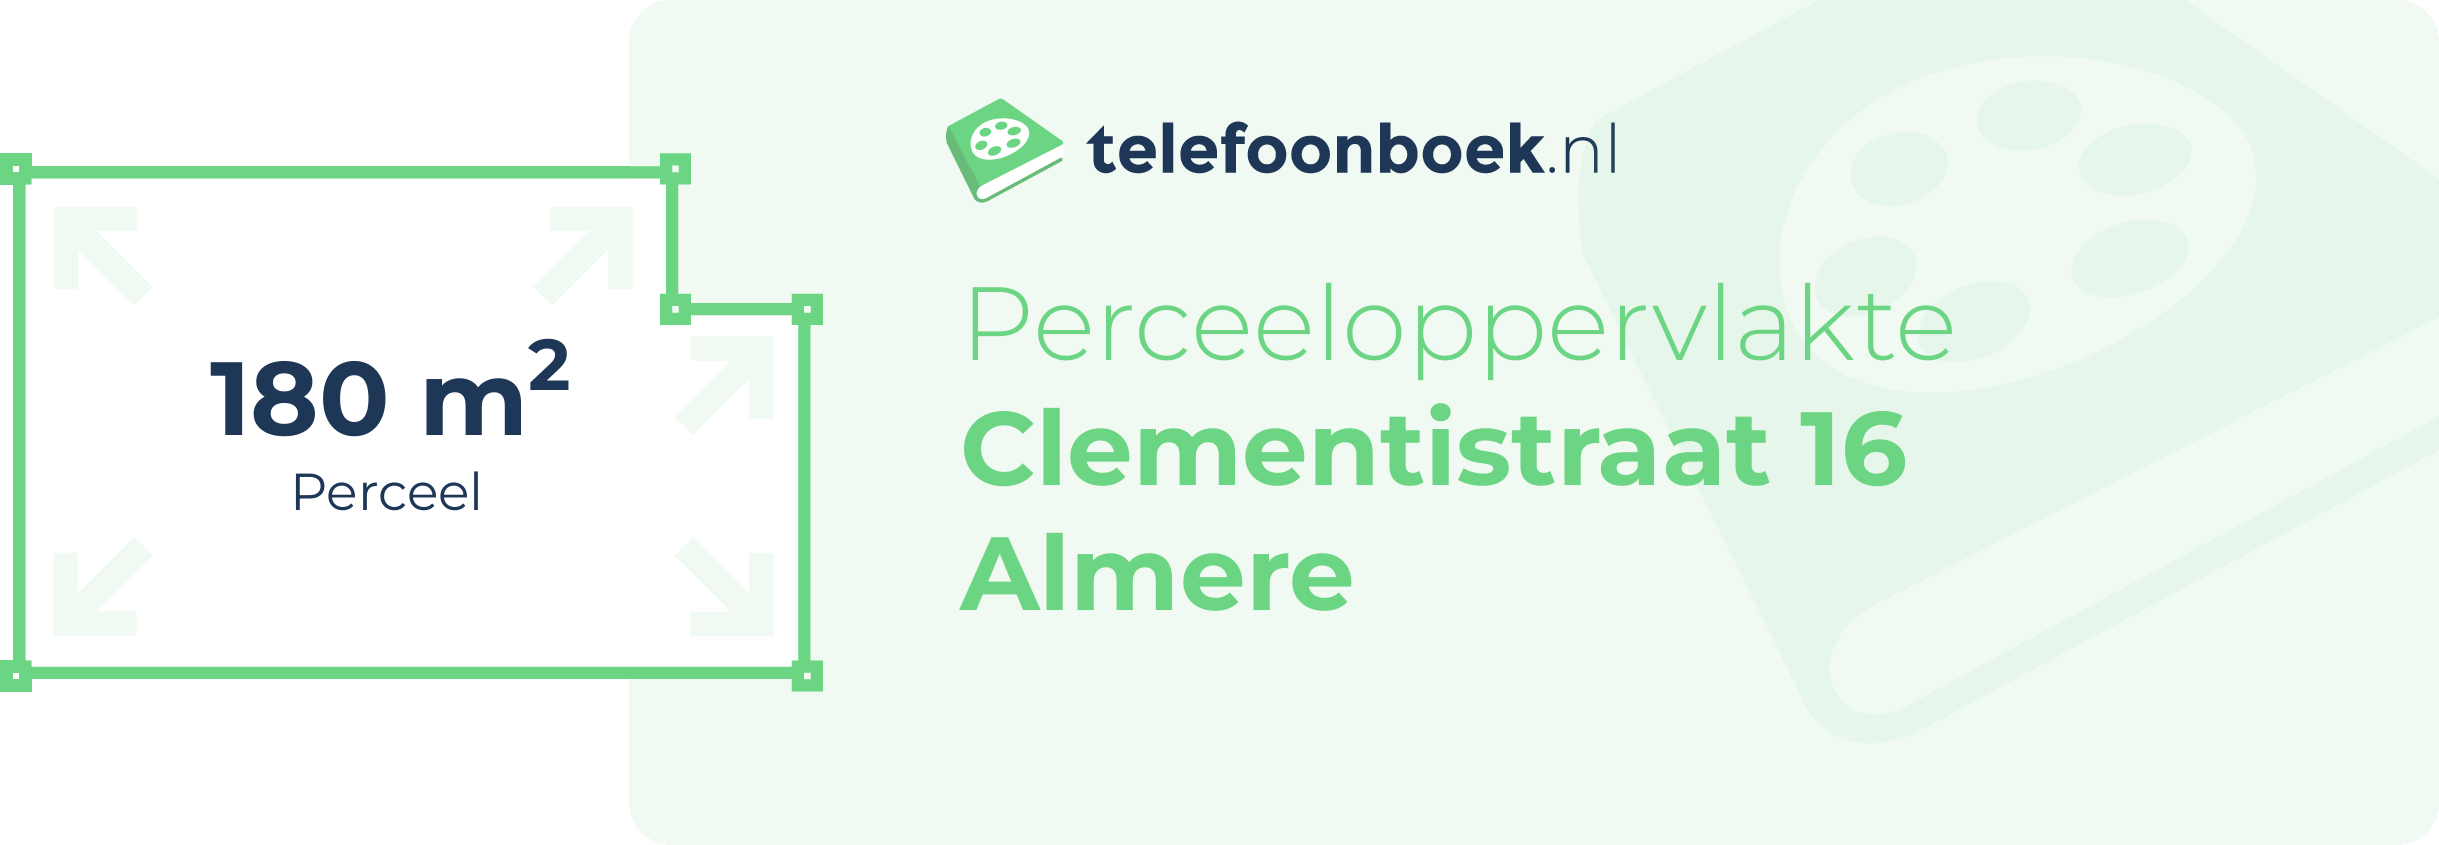 Perceeloppervlakte Clementistraat 16 Almere